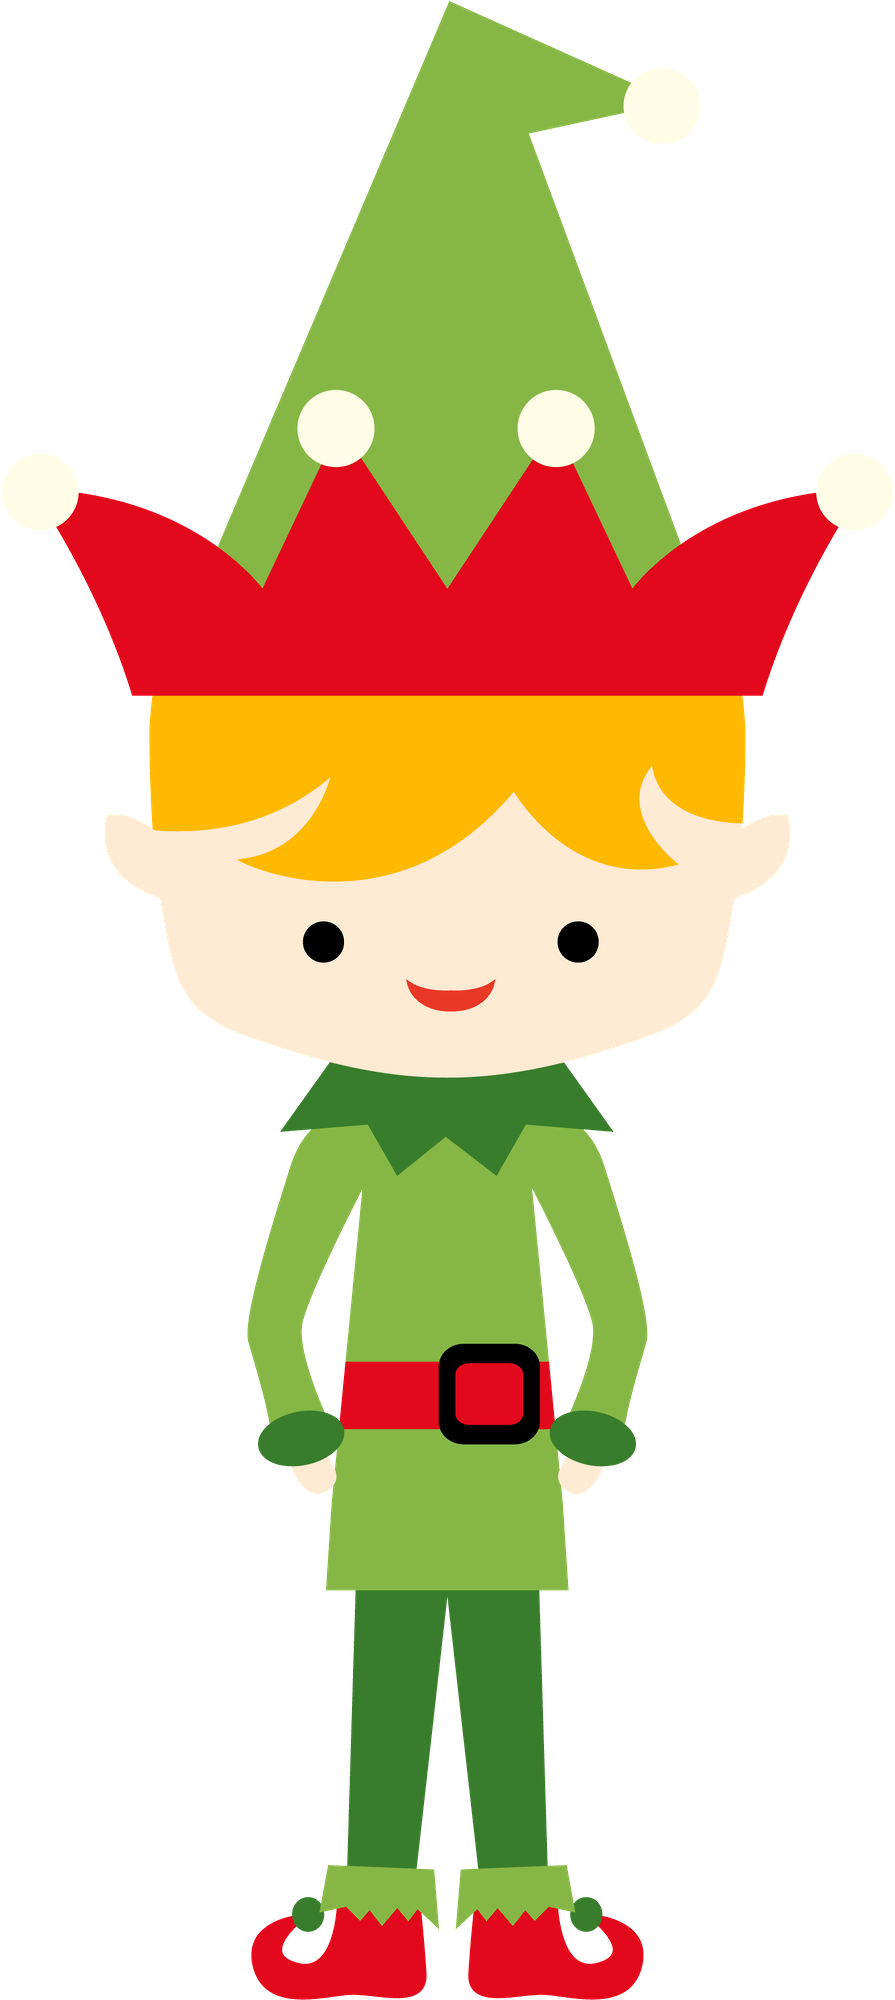 A Cartoon Of A Elf